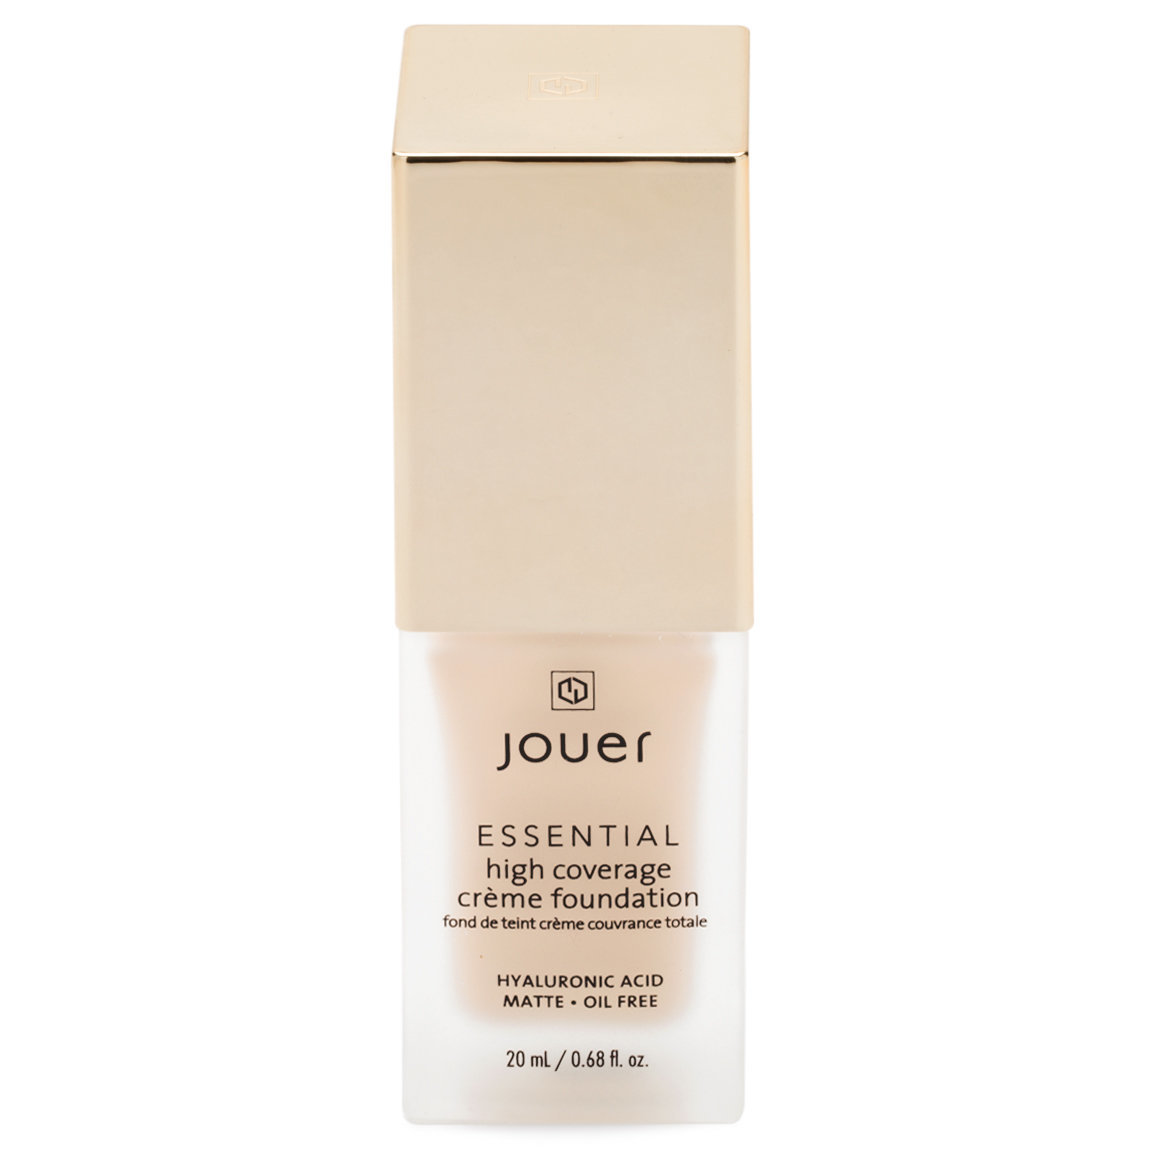 Jouer Cosmetics Essential High Coverage Crème Foundation Warm Ivory alternative view 1.